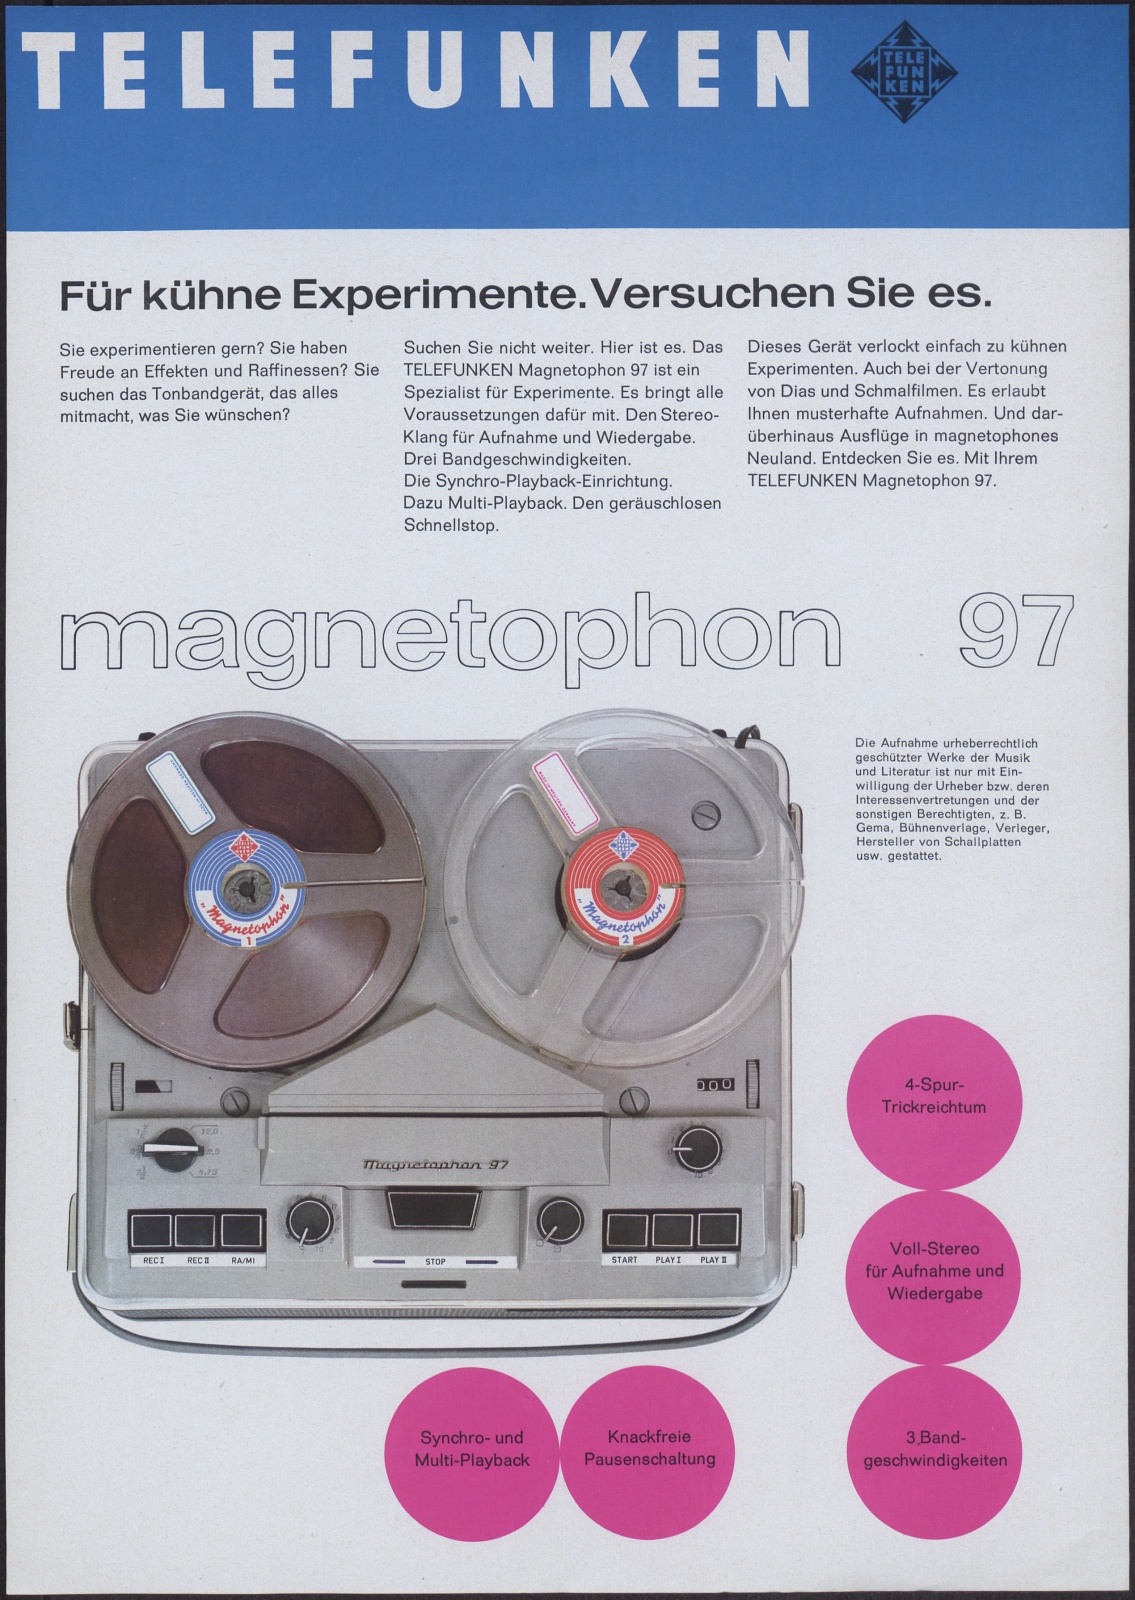 Werbeprospekt: Telefunken magnetophon 97 (Stiftung Deutsches Technikmuseum Berlin CC0)